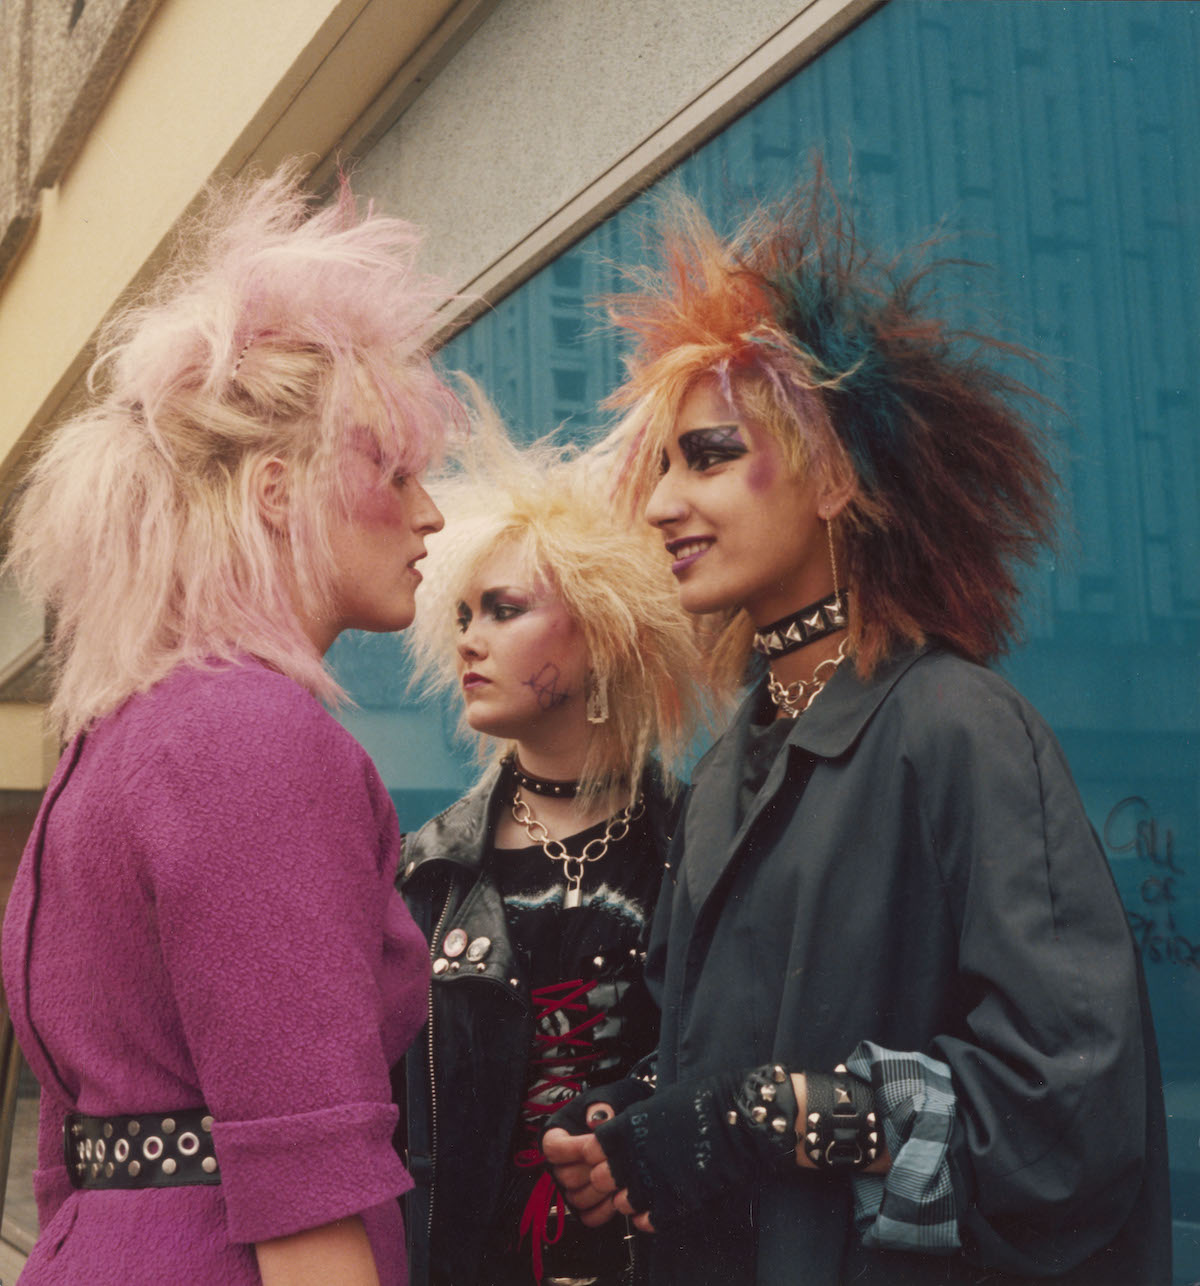 punks 1980s